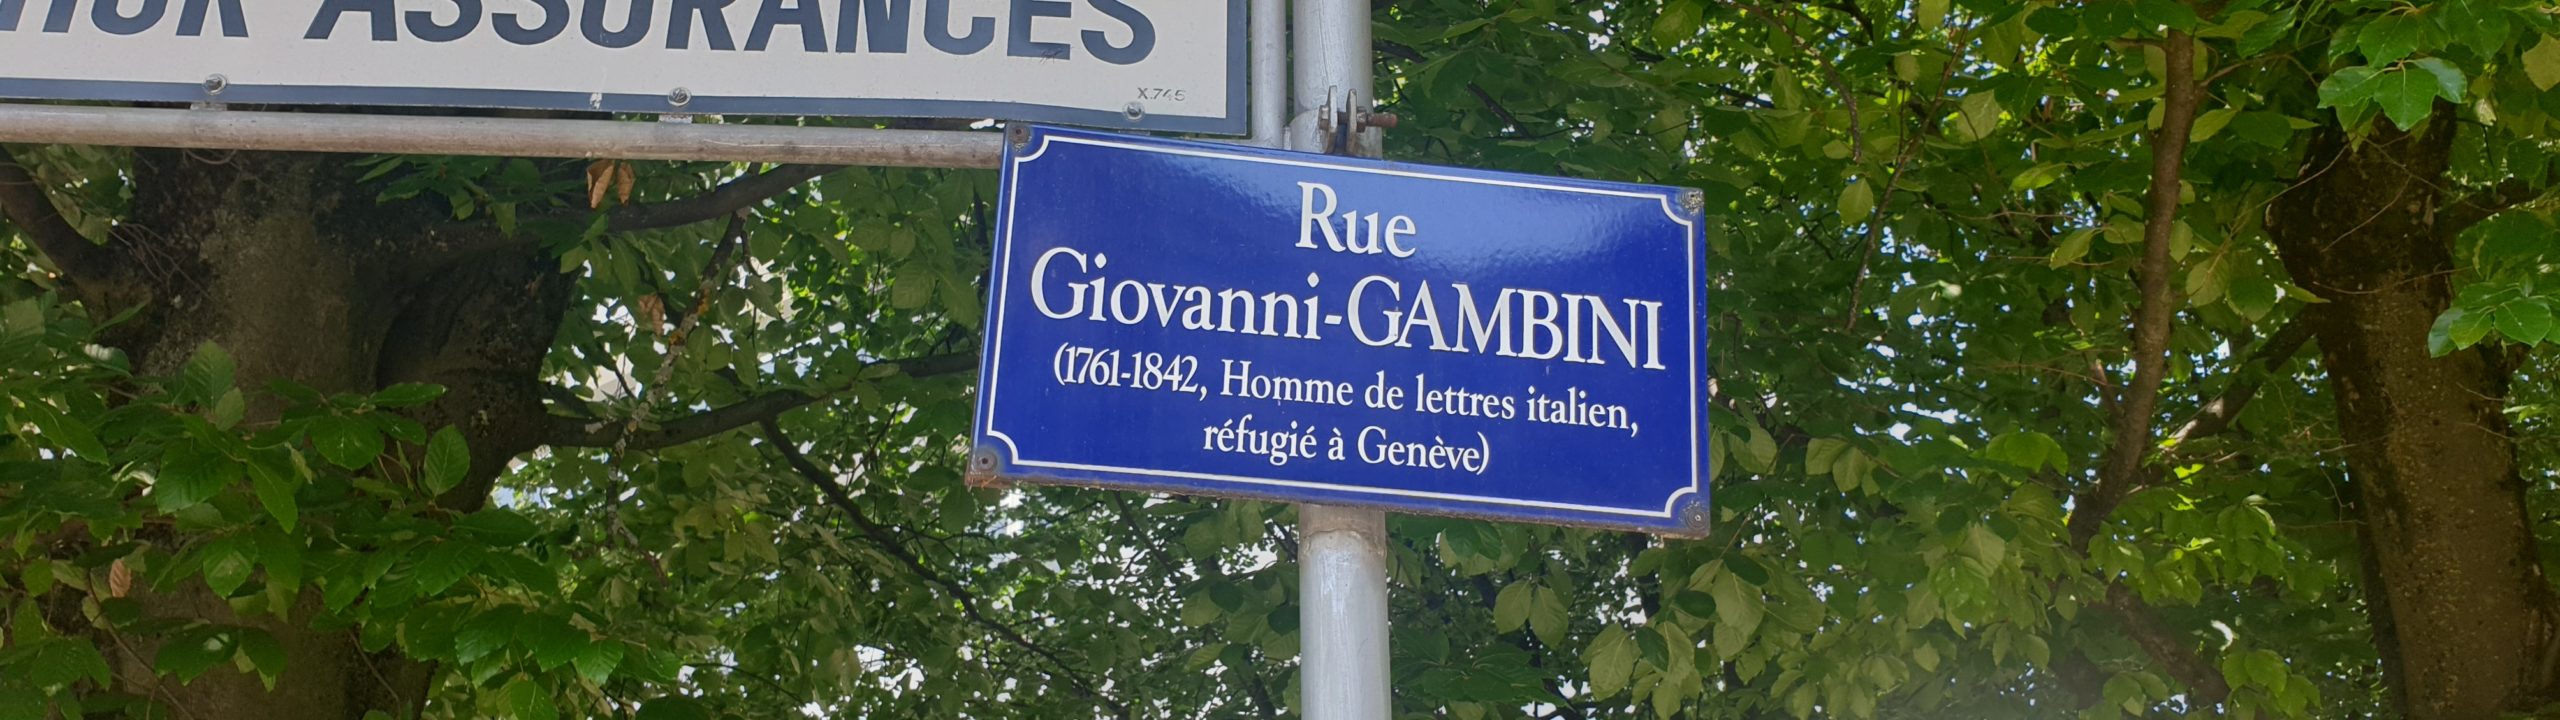 Giovanni Gambini